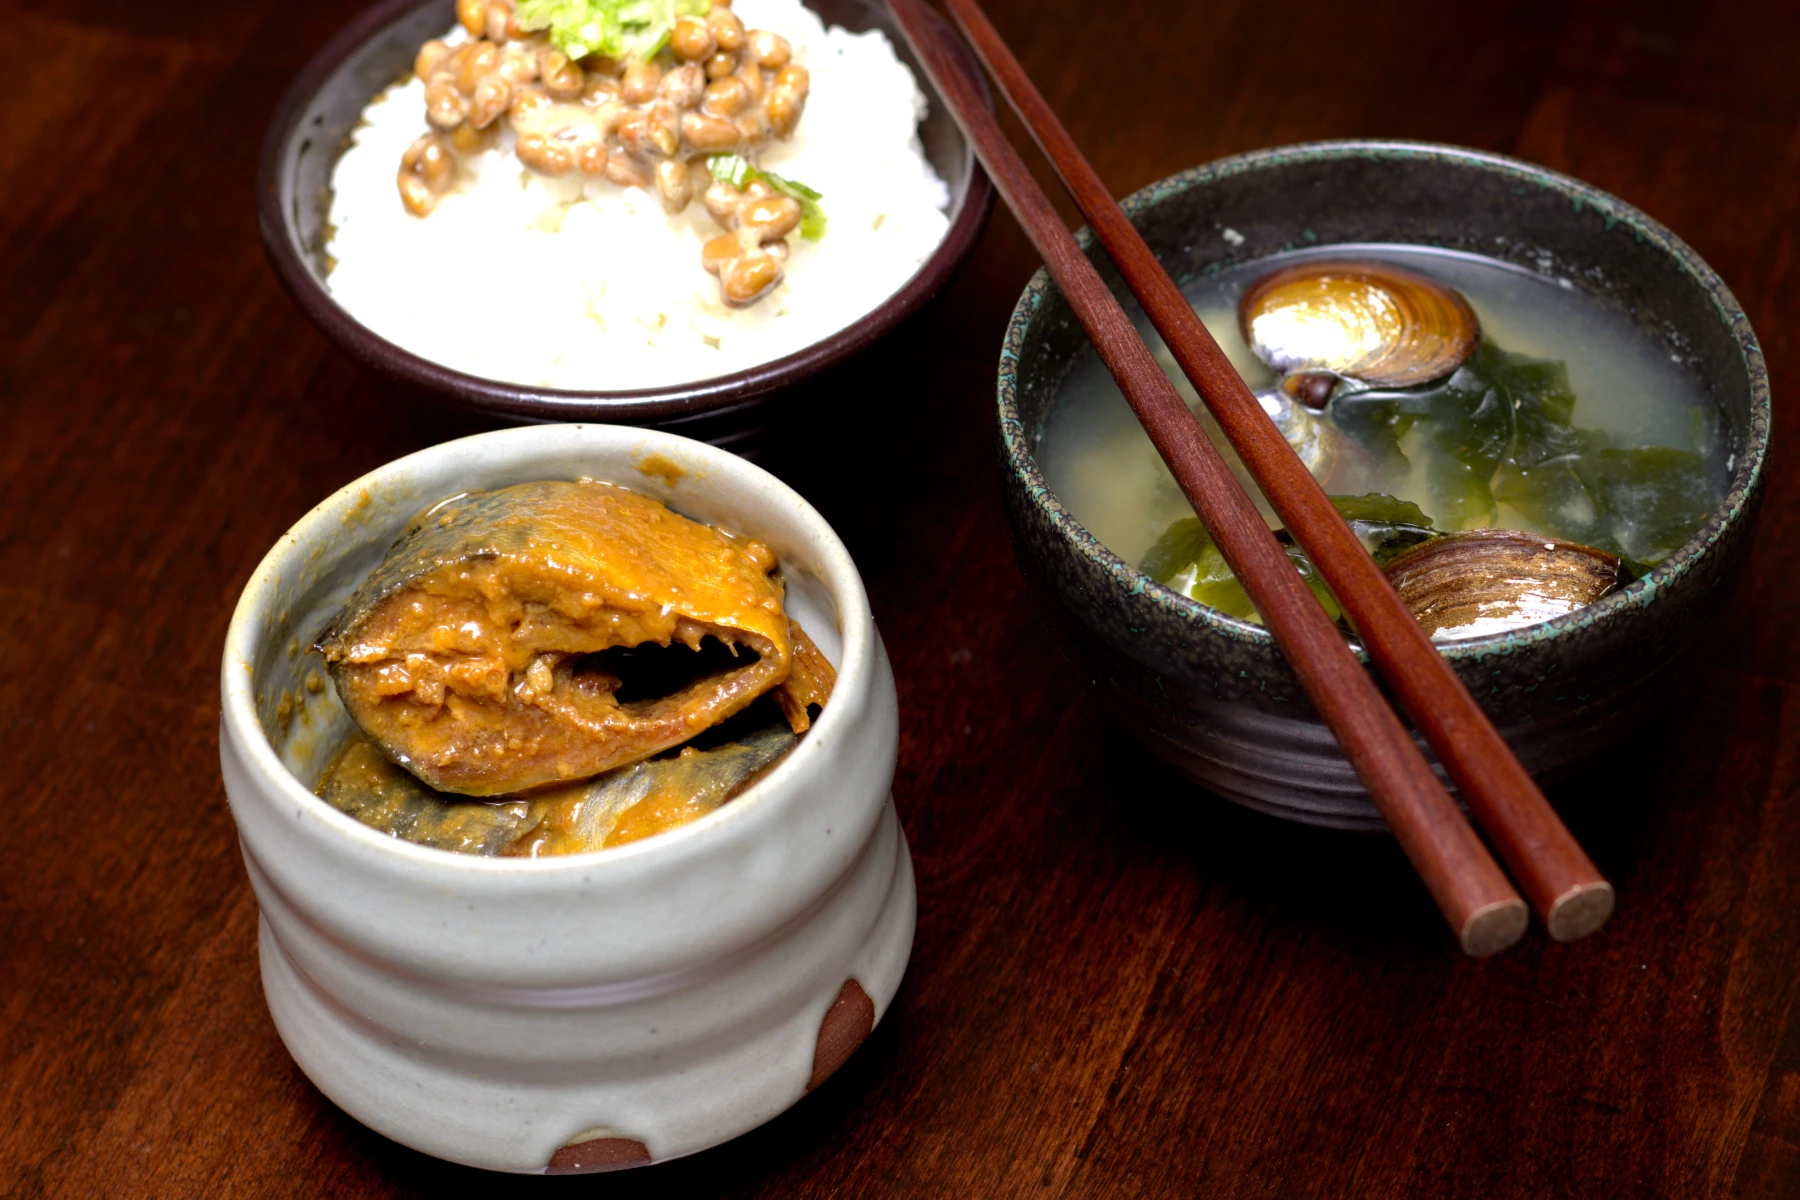 Mackerel with rice, natto, miso soup, clams, tofu.